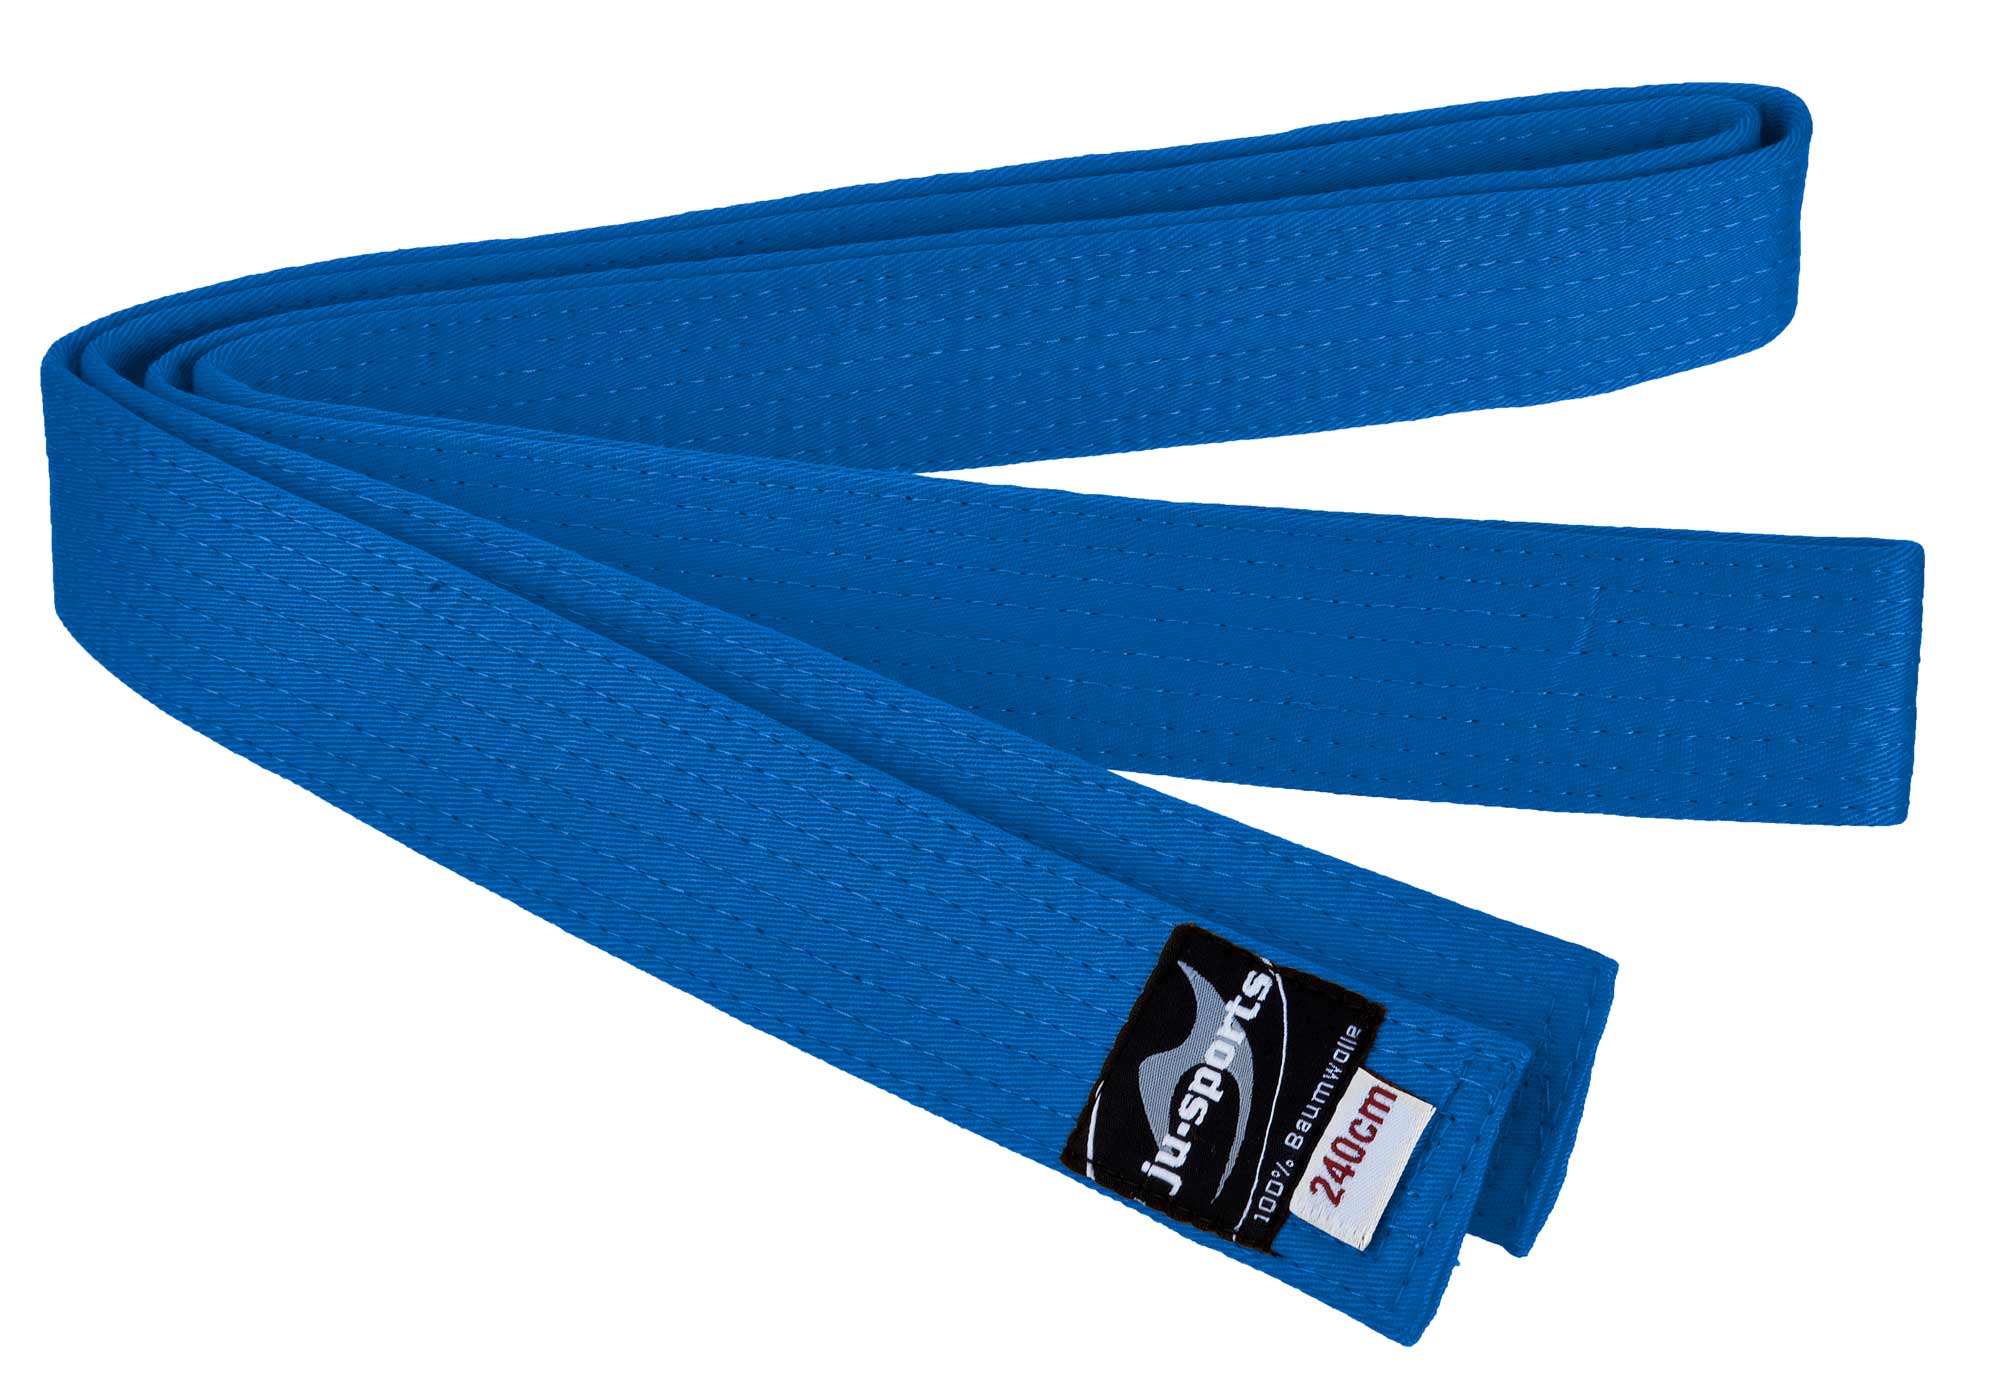 Ju-Sports budo belt blue